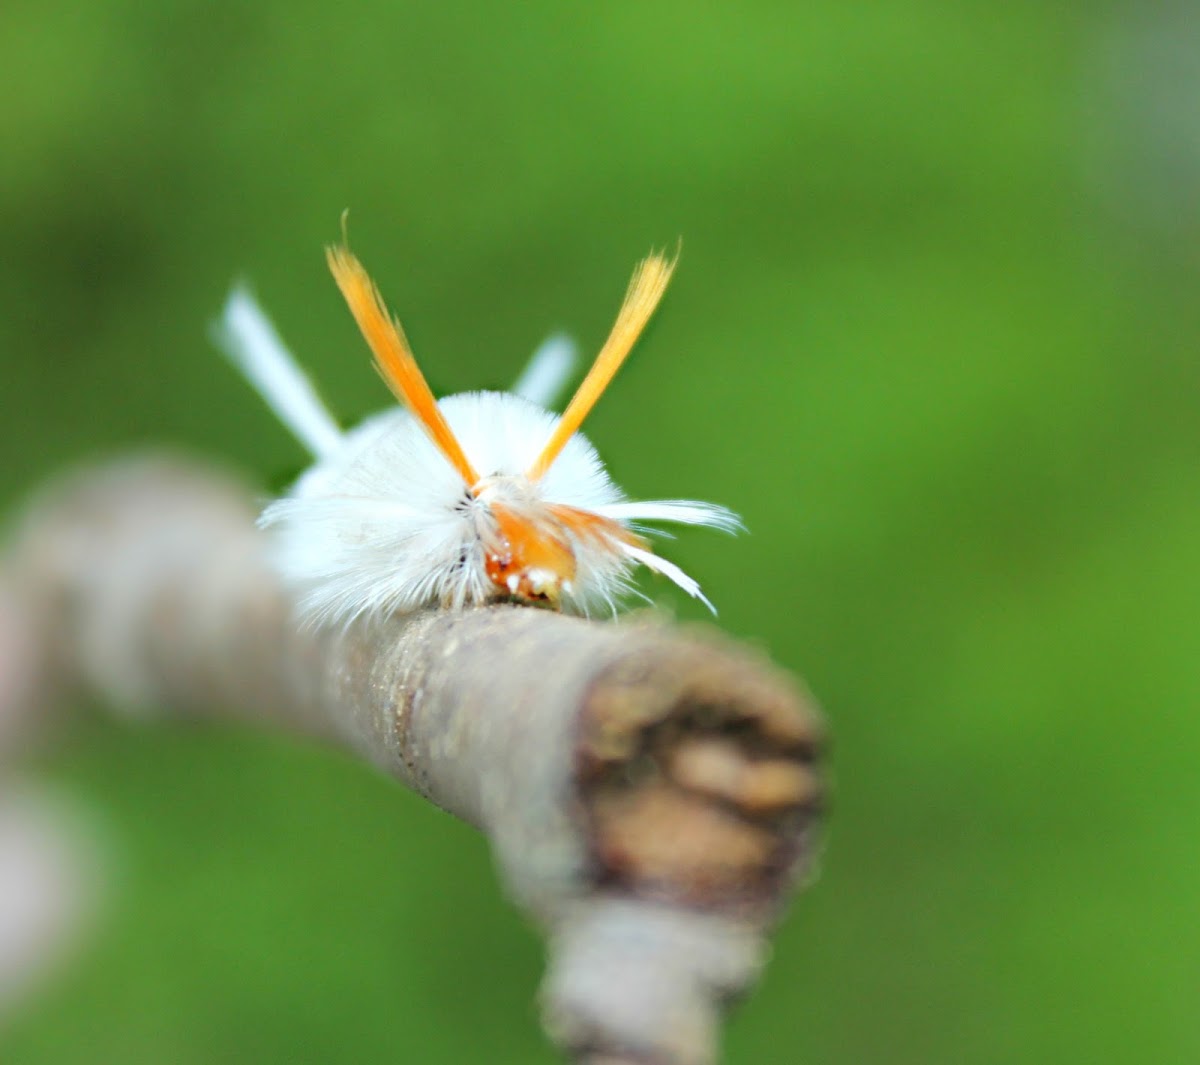 Sycamore tussock moth caterpillar